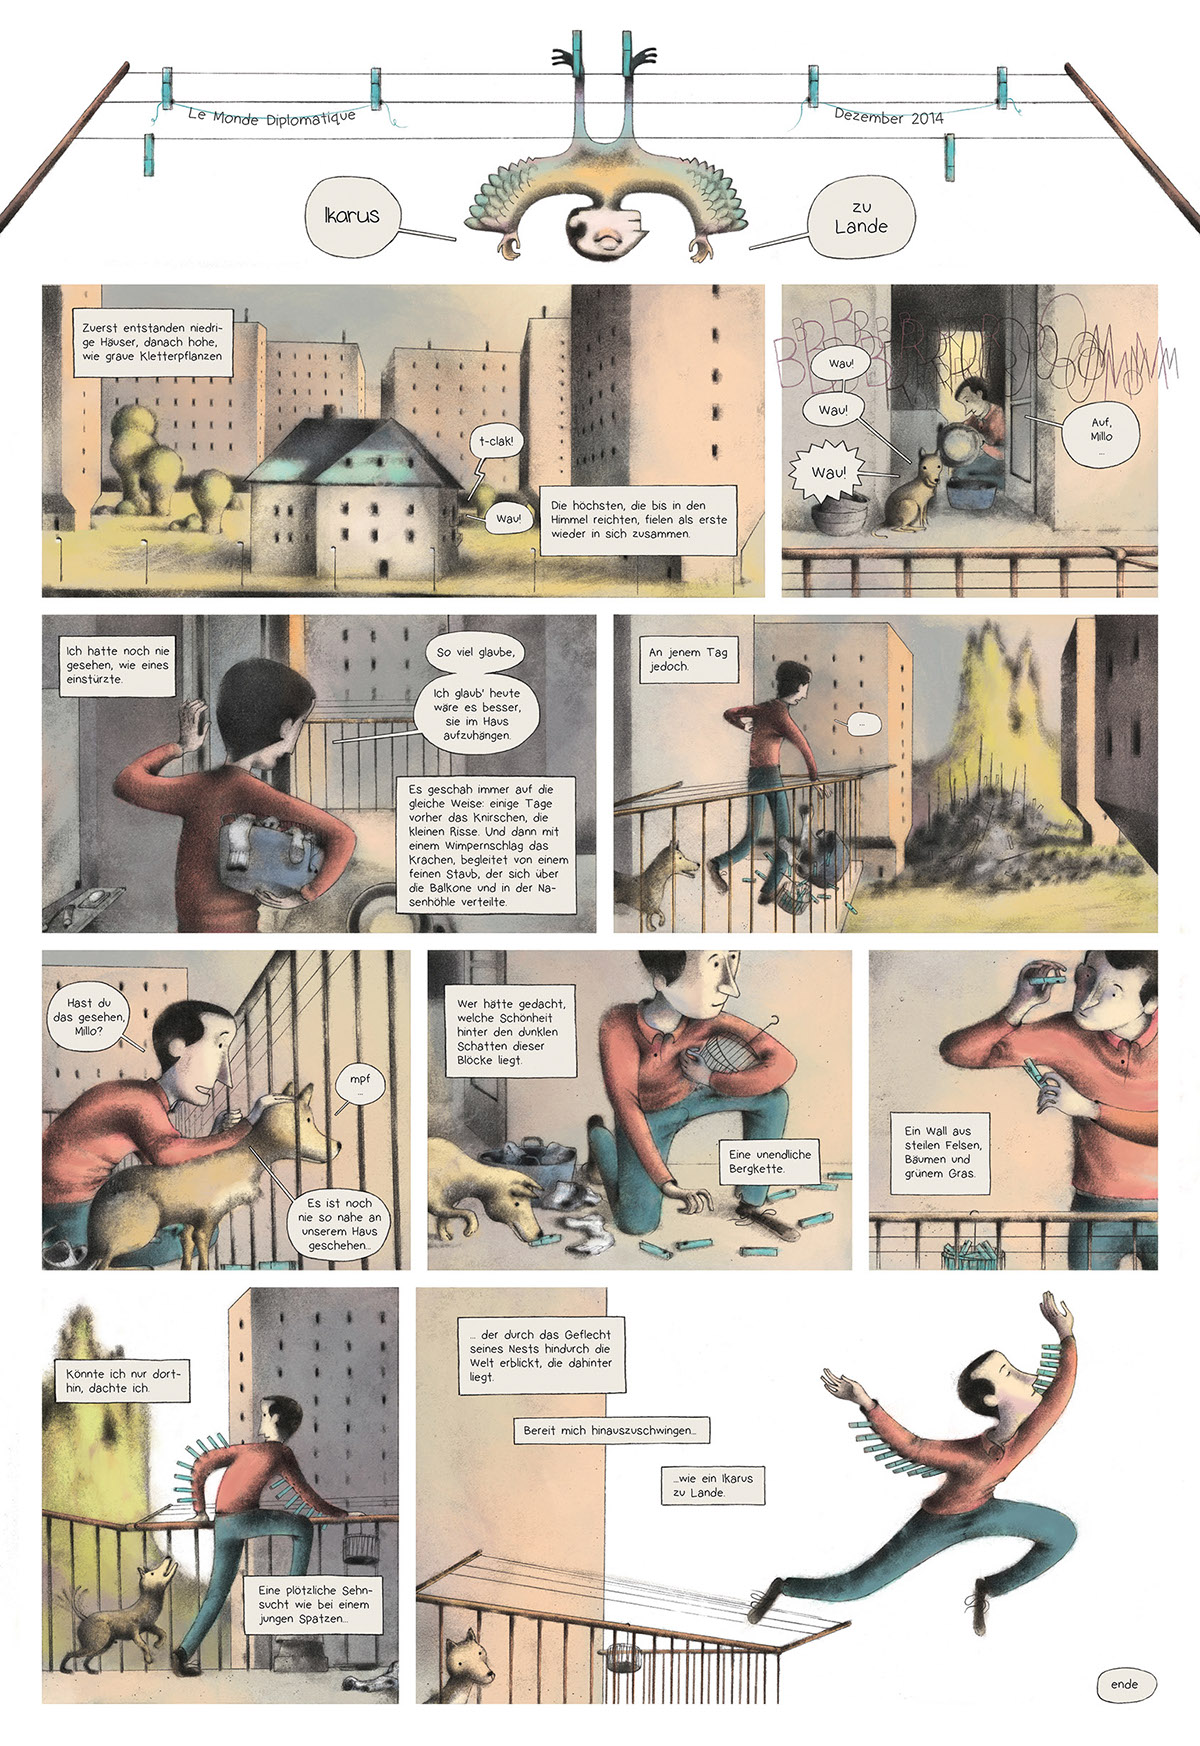 'comic' 'illustration' 'magazine' 'le monde diplomatique' 'berlin'